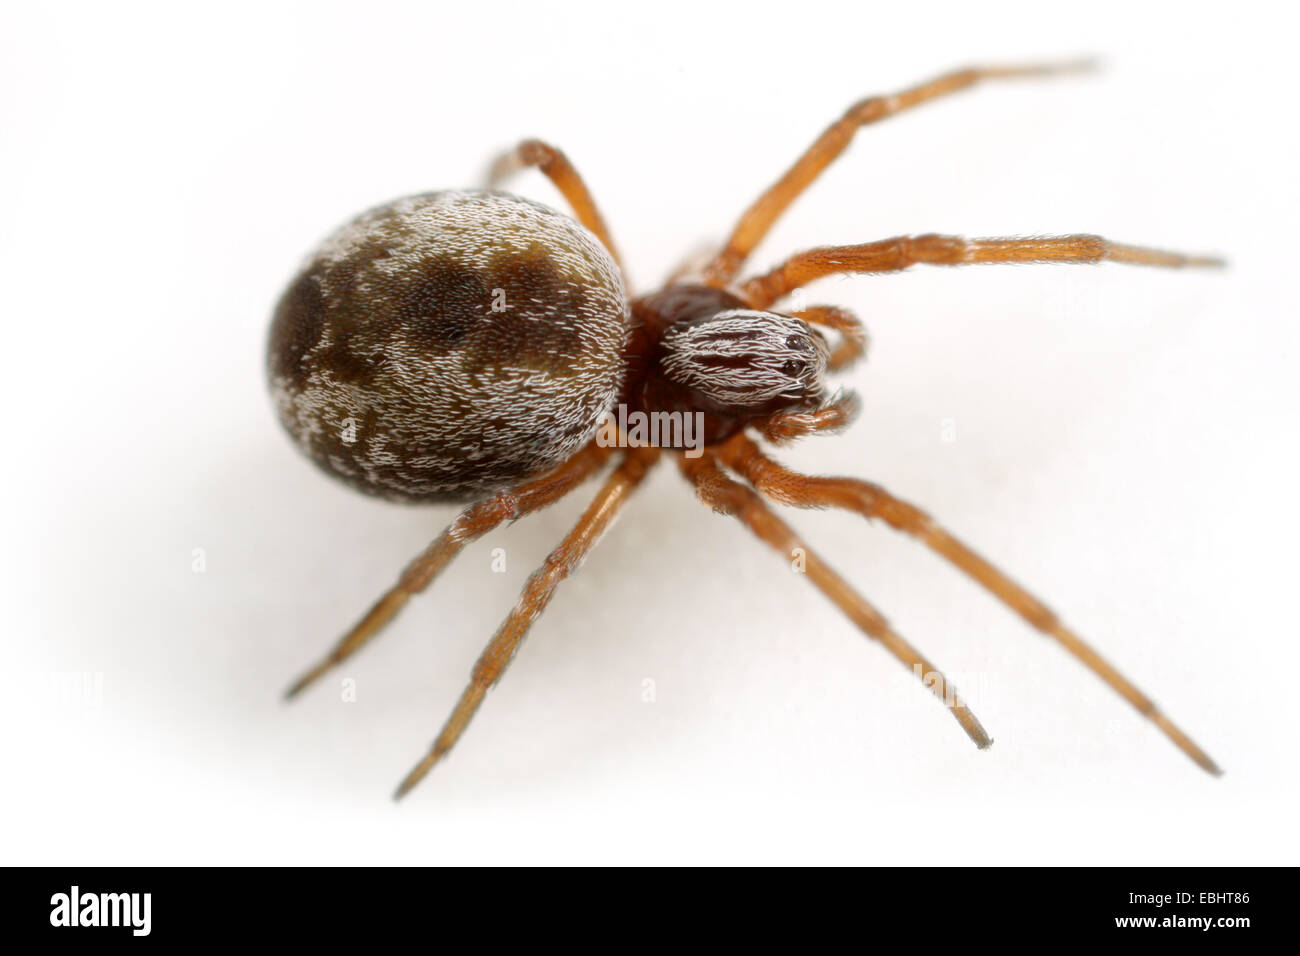 Hembra arundinacea Dictyna spider sobre fondo blanco. Familia Dictynidae, Meshweb tejedores. Foto de stock